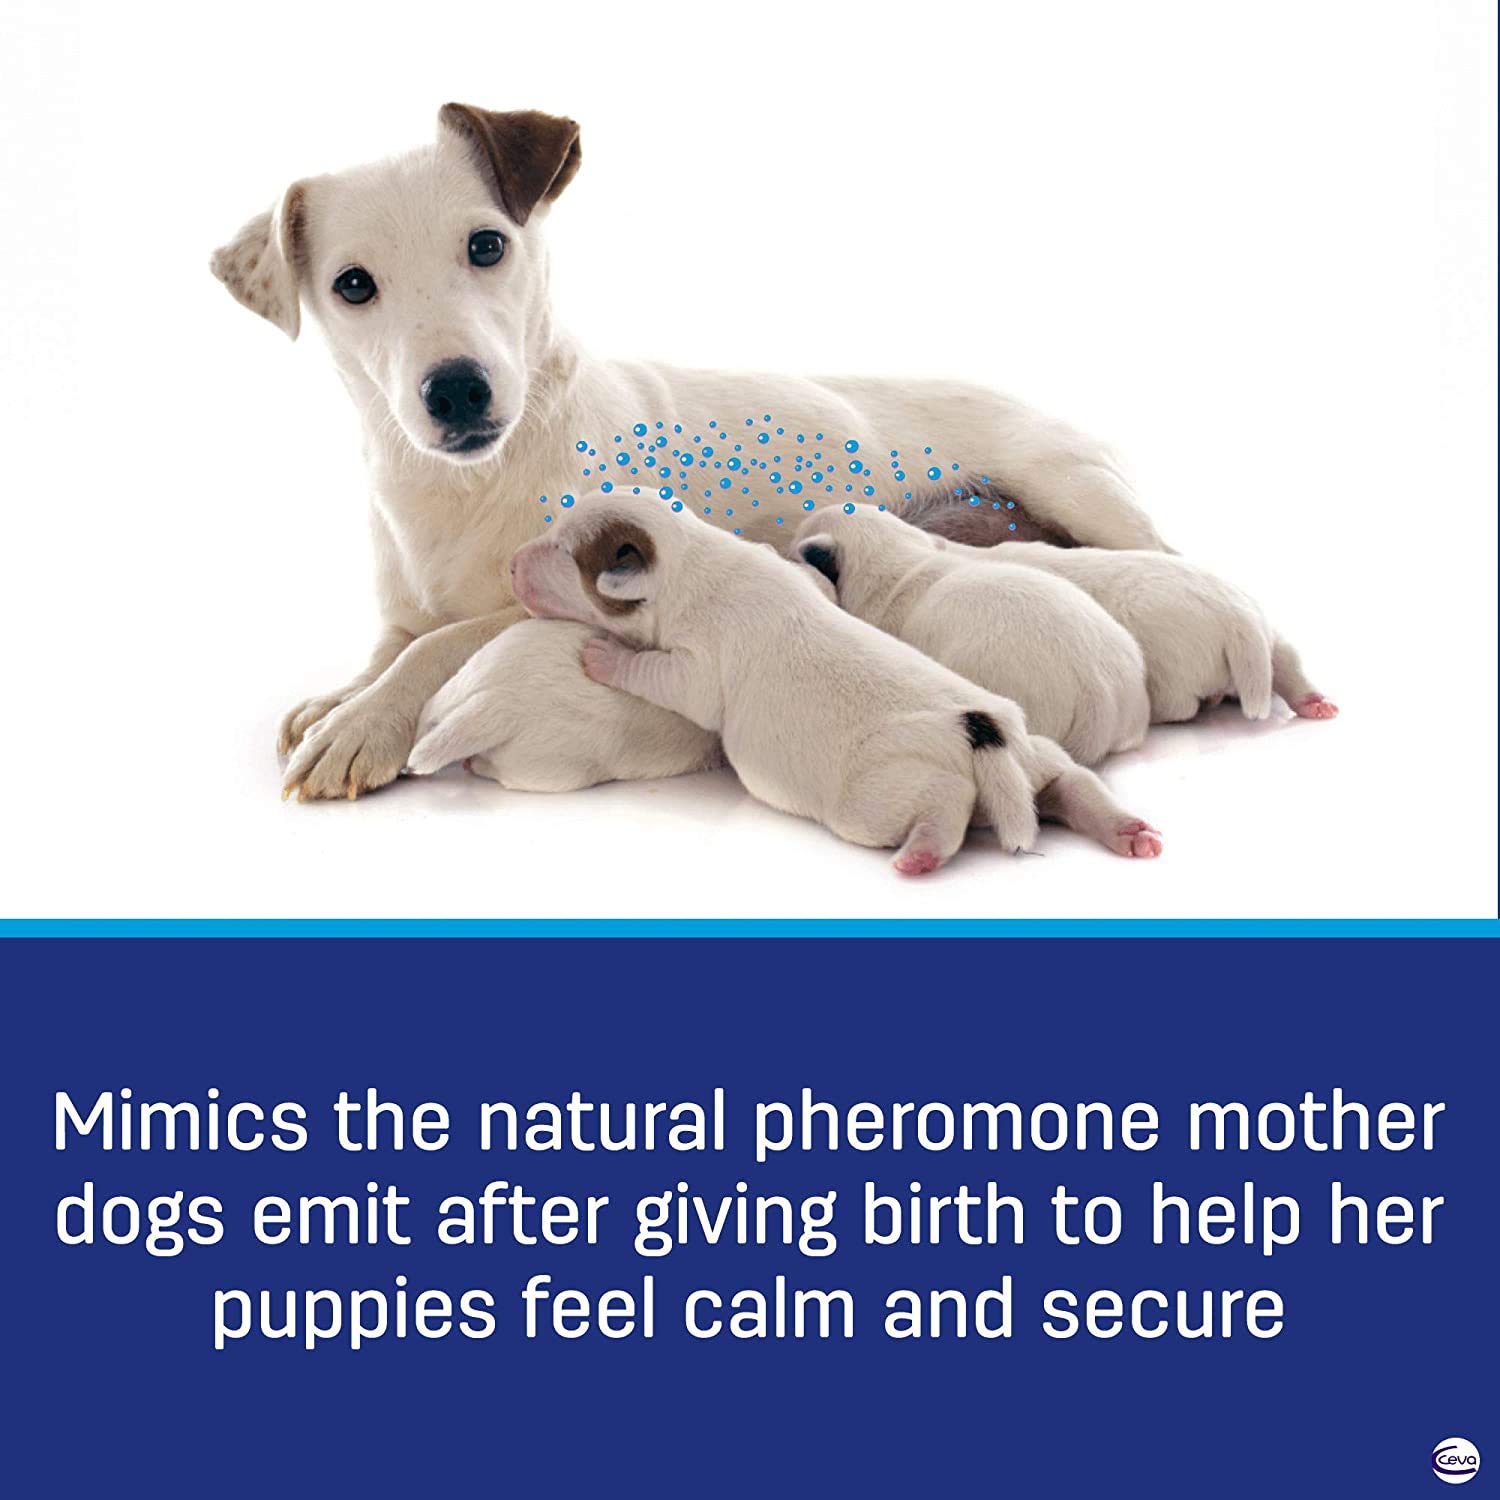 ADAPTIL Calming Pheromone Collar for Dogs, Medium/Large